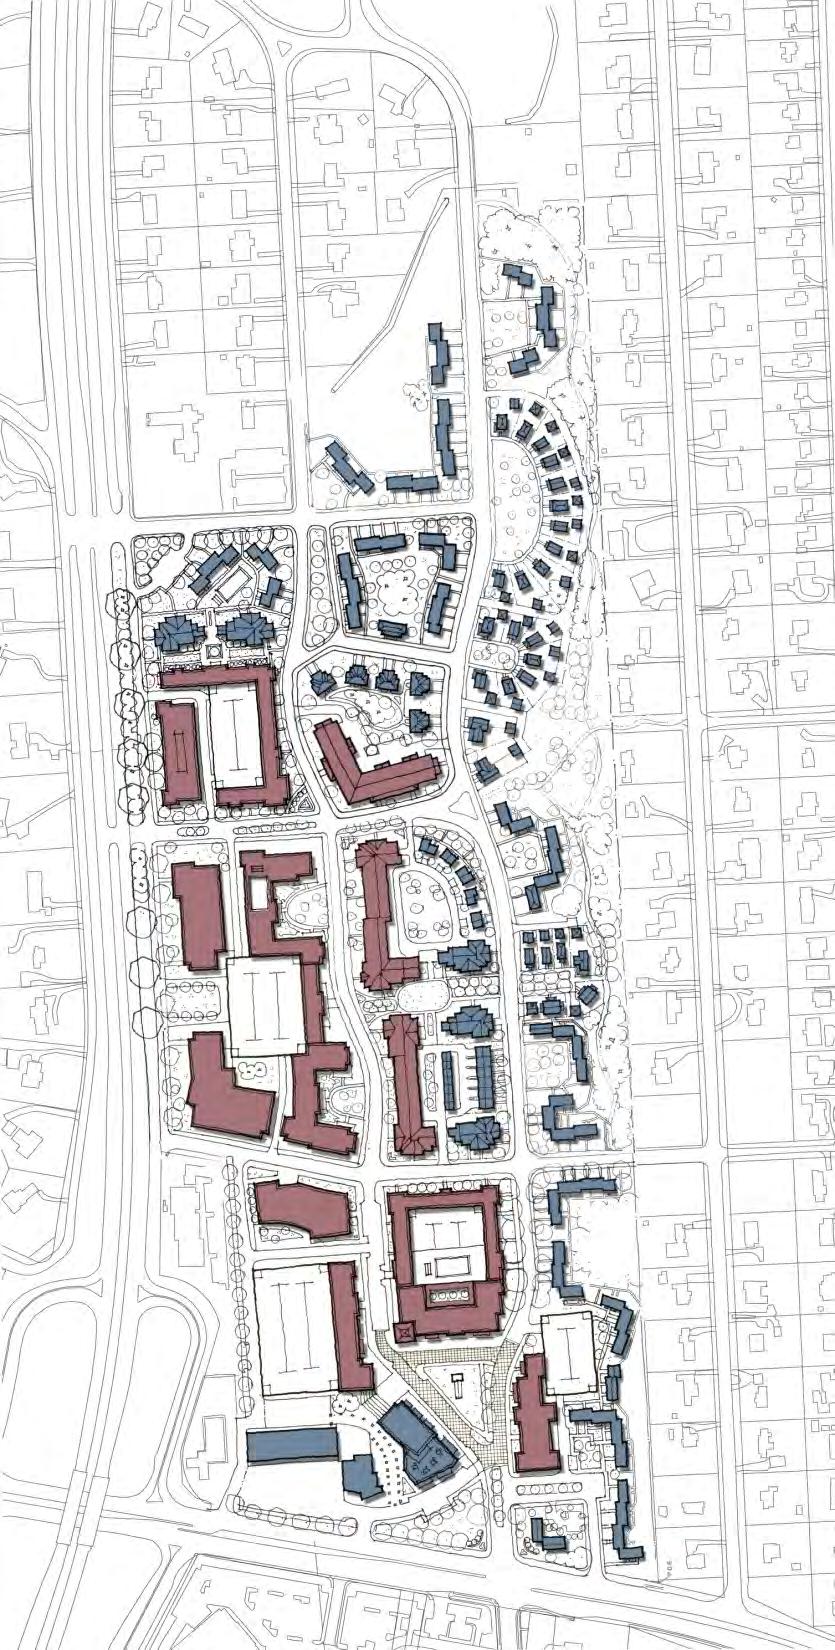 Building Density - Density decreases as you approach single family neighborhood - Low density (shown in blue) is